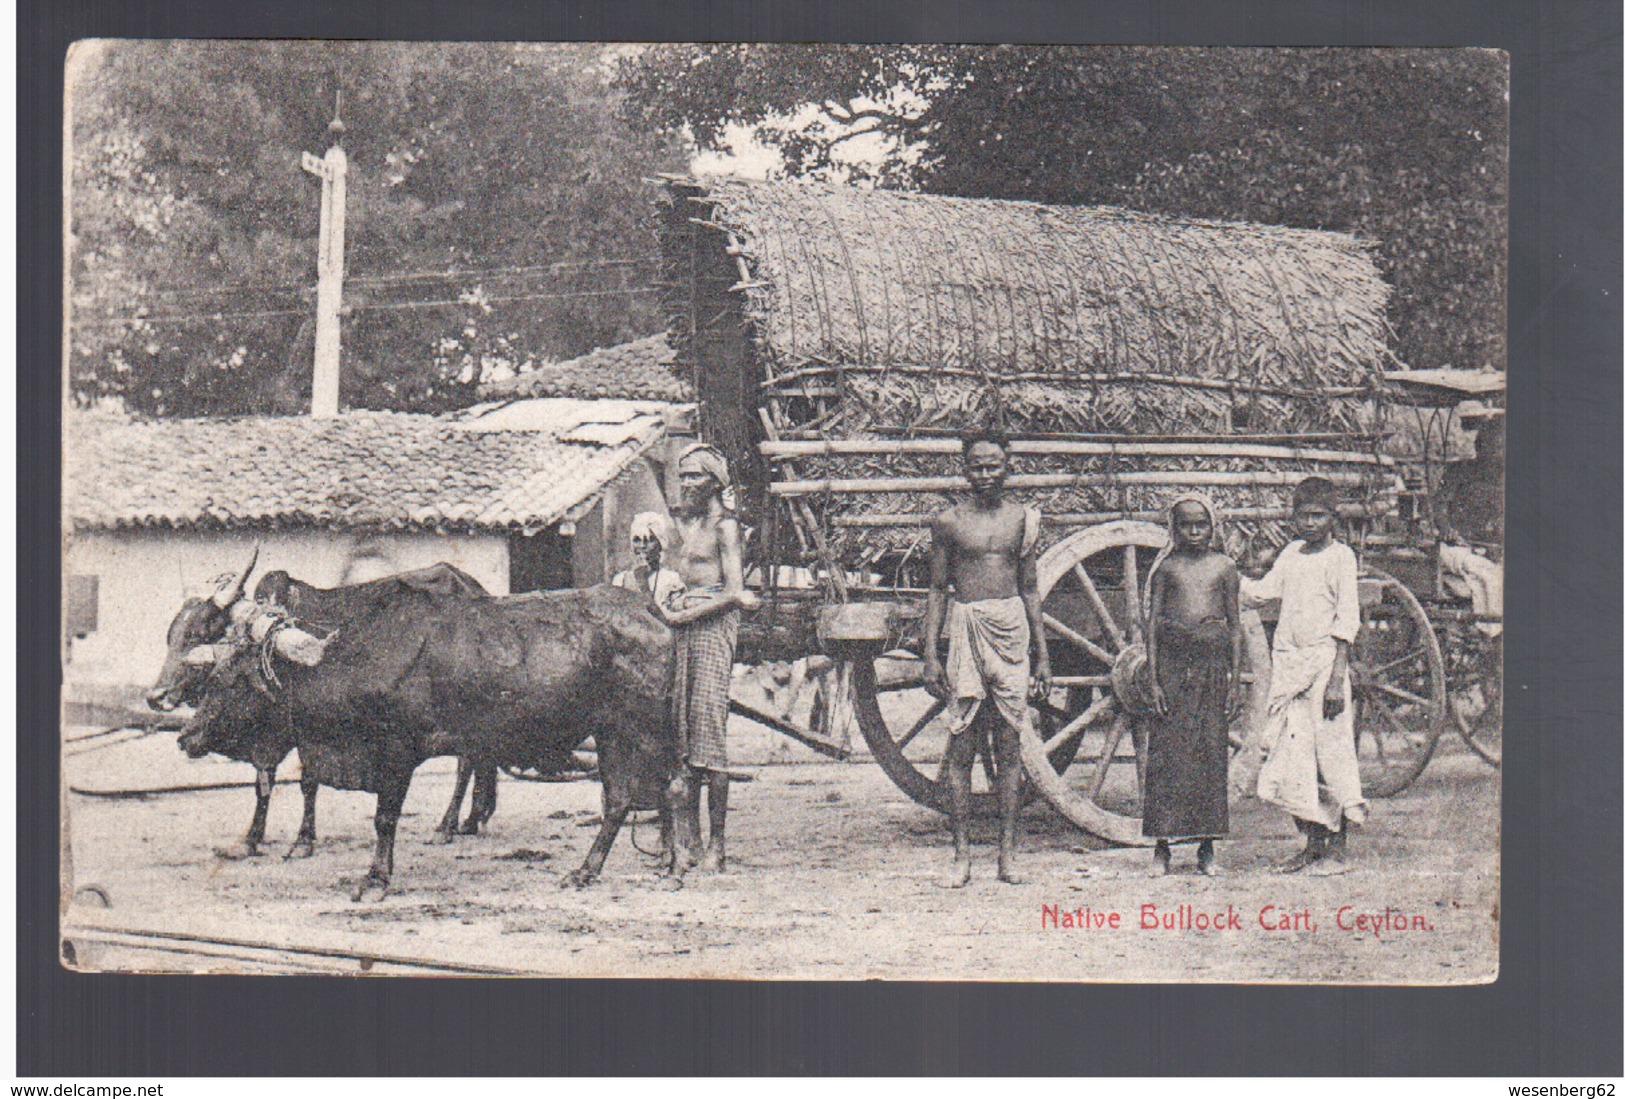 CEYLON Native Bullock Cart 1908 OLD POSTCARD - Sri Lanka (Ceylon)